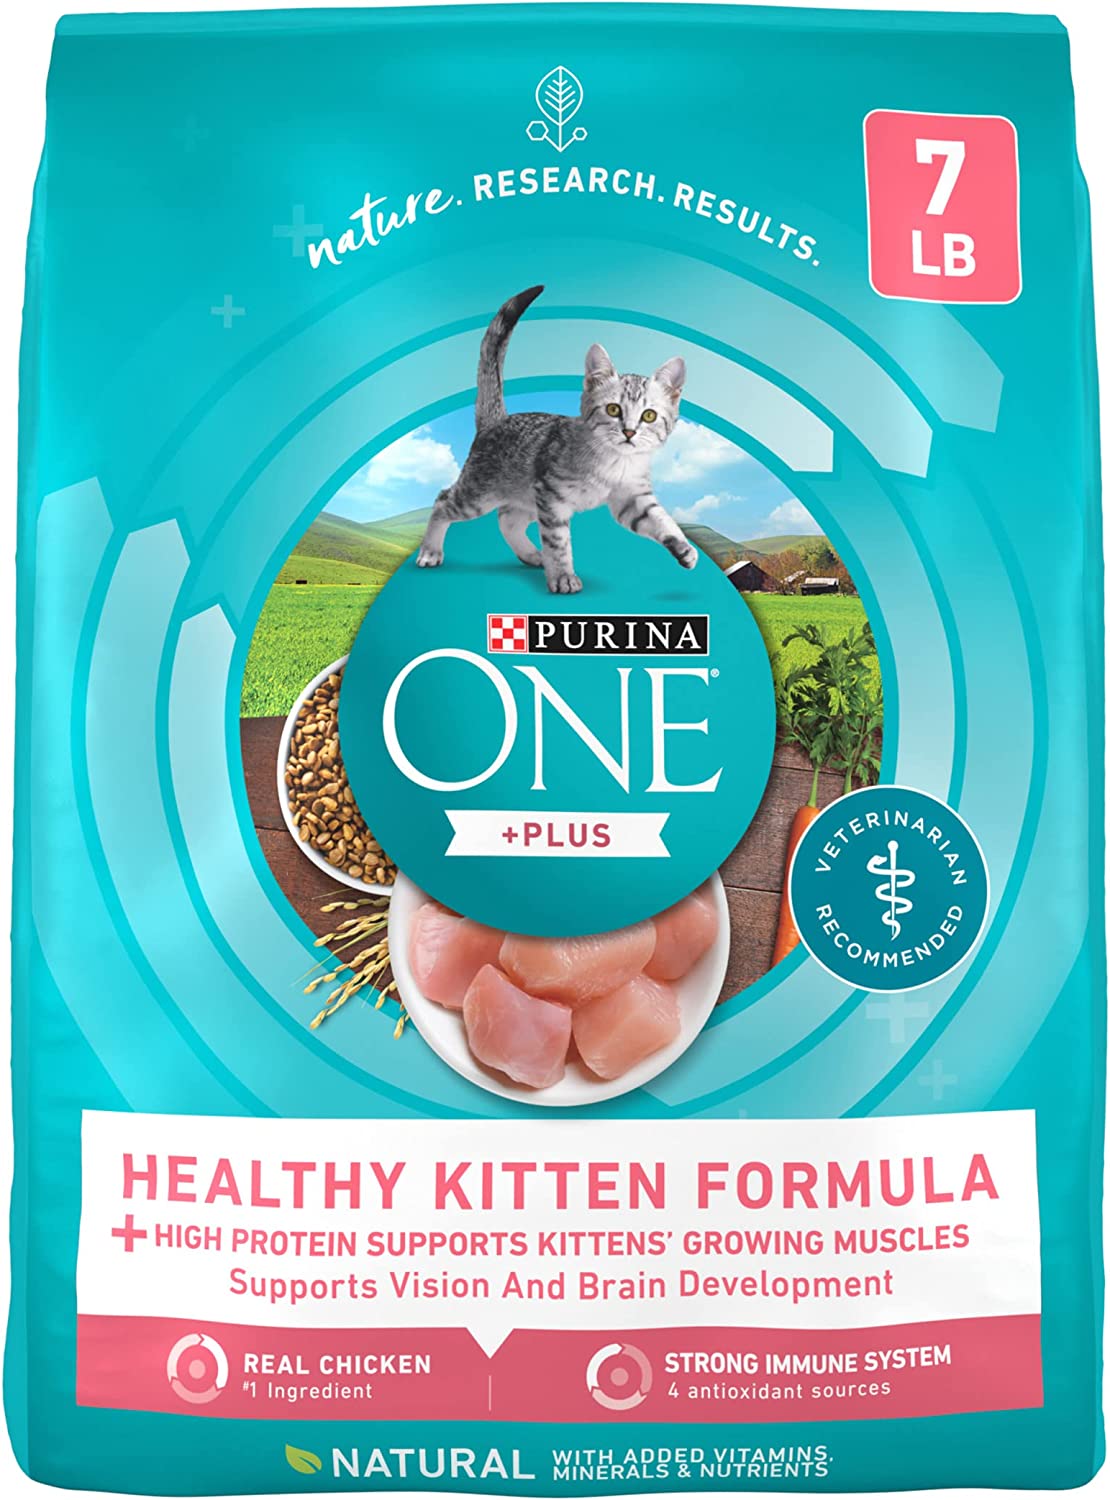 Purina ONE Healthy Kitten Dry & Wet Kitten Food 7LB $5.87